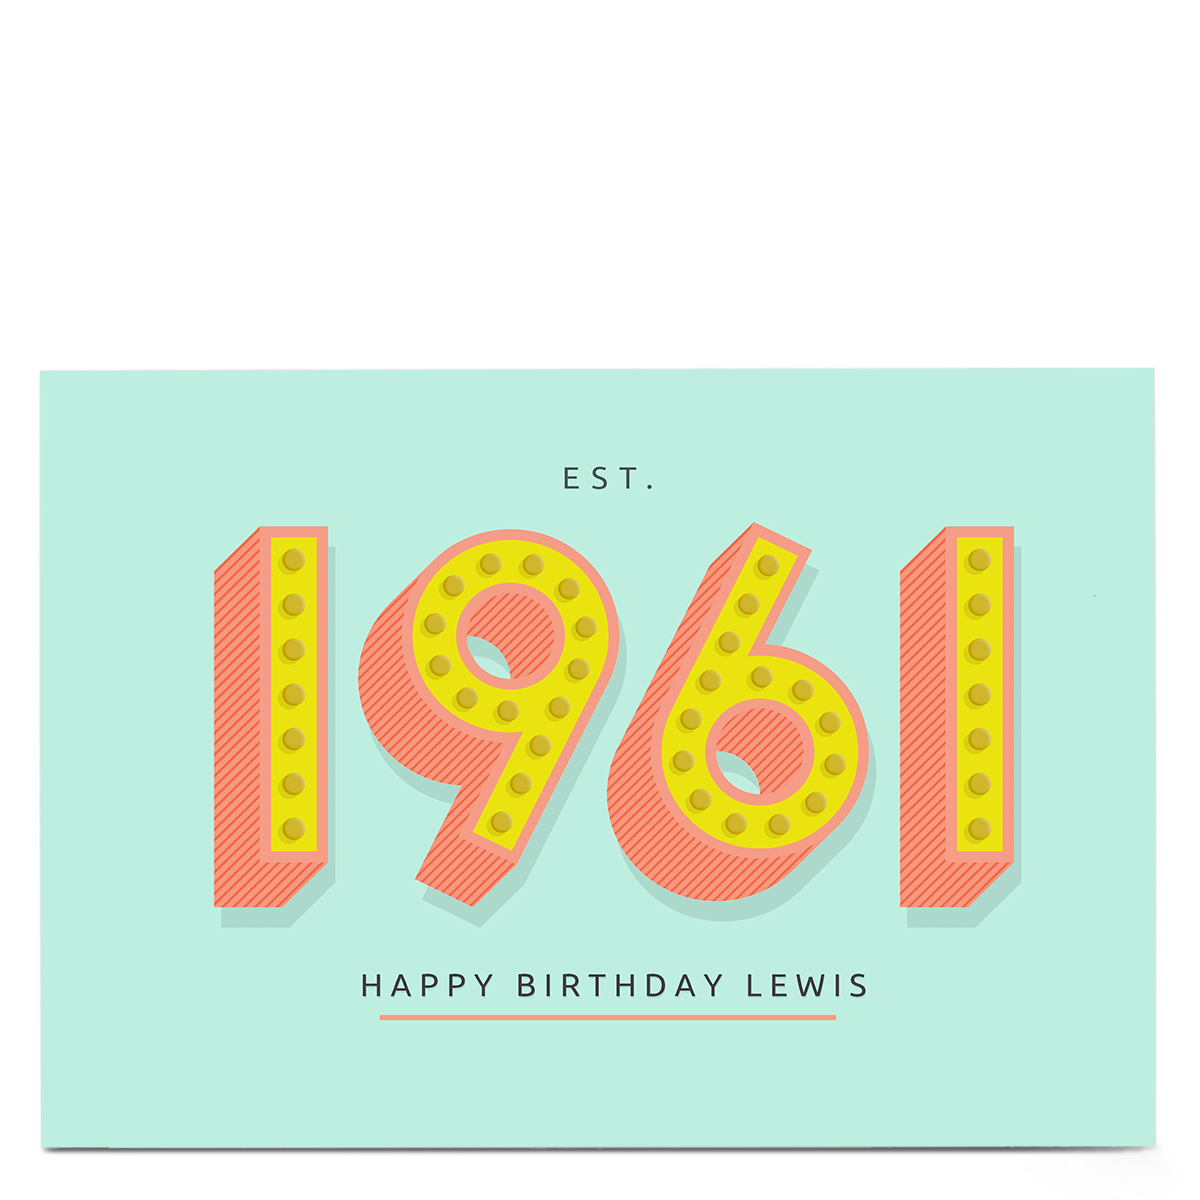 Personalised Birthday Card - Est. 1961